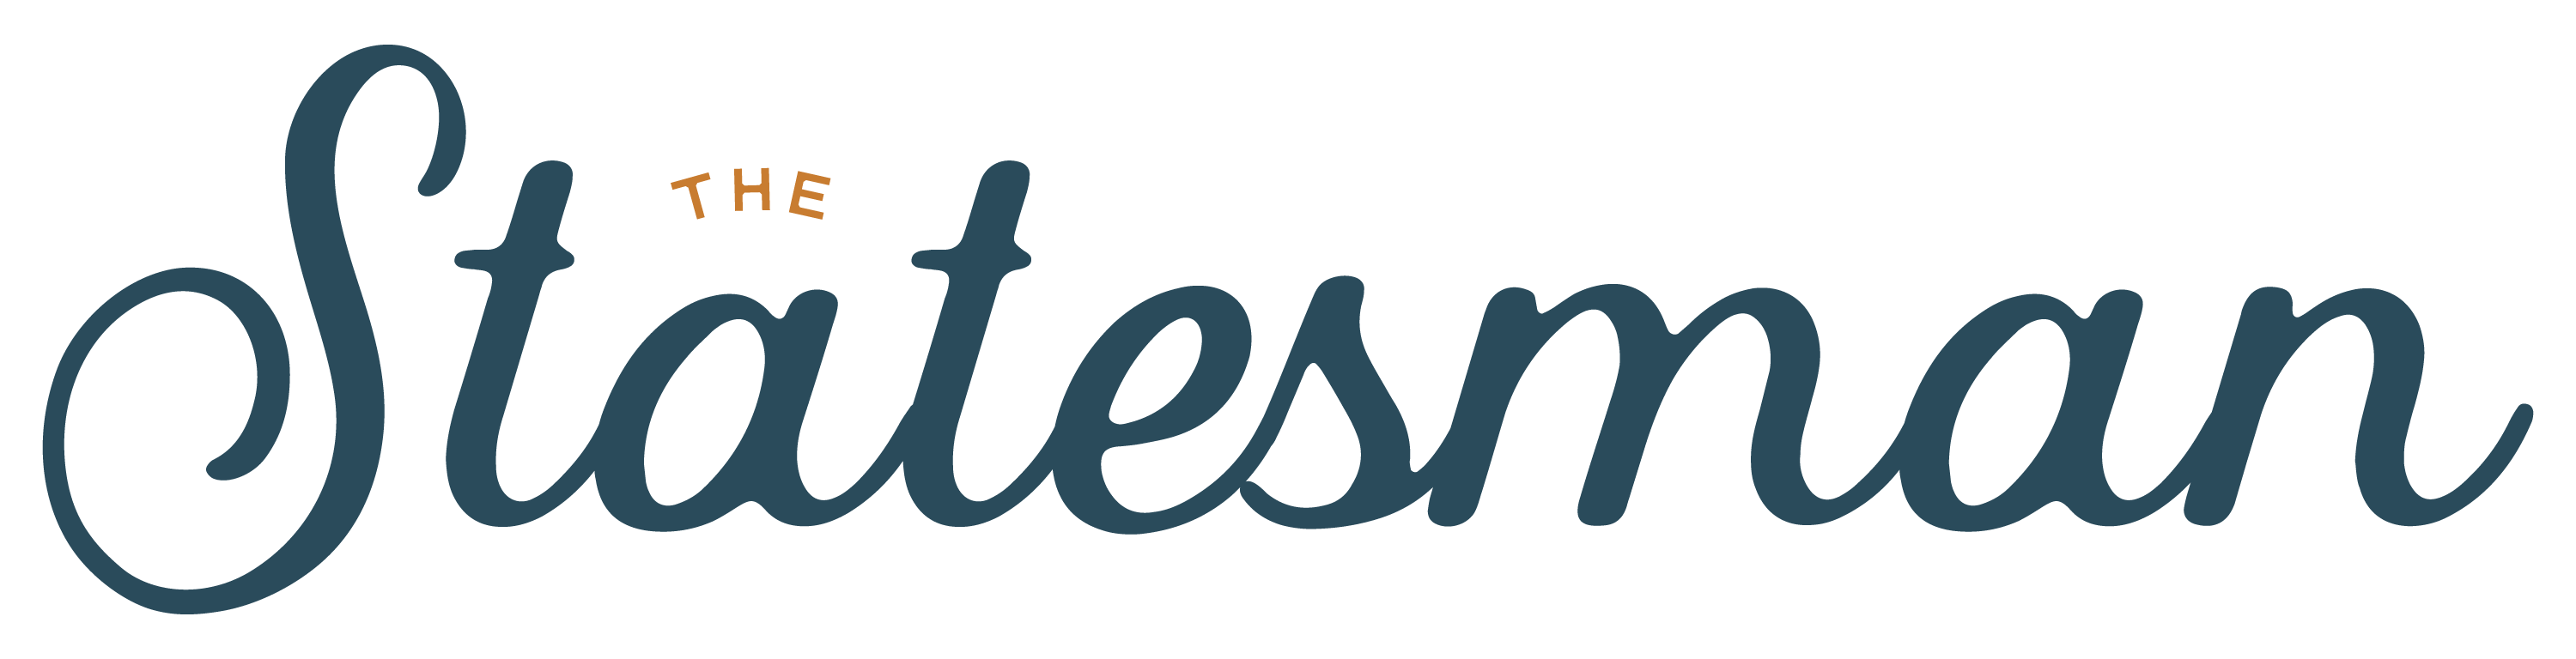 The Statesman Logo